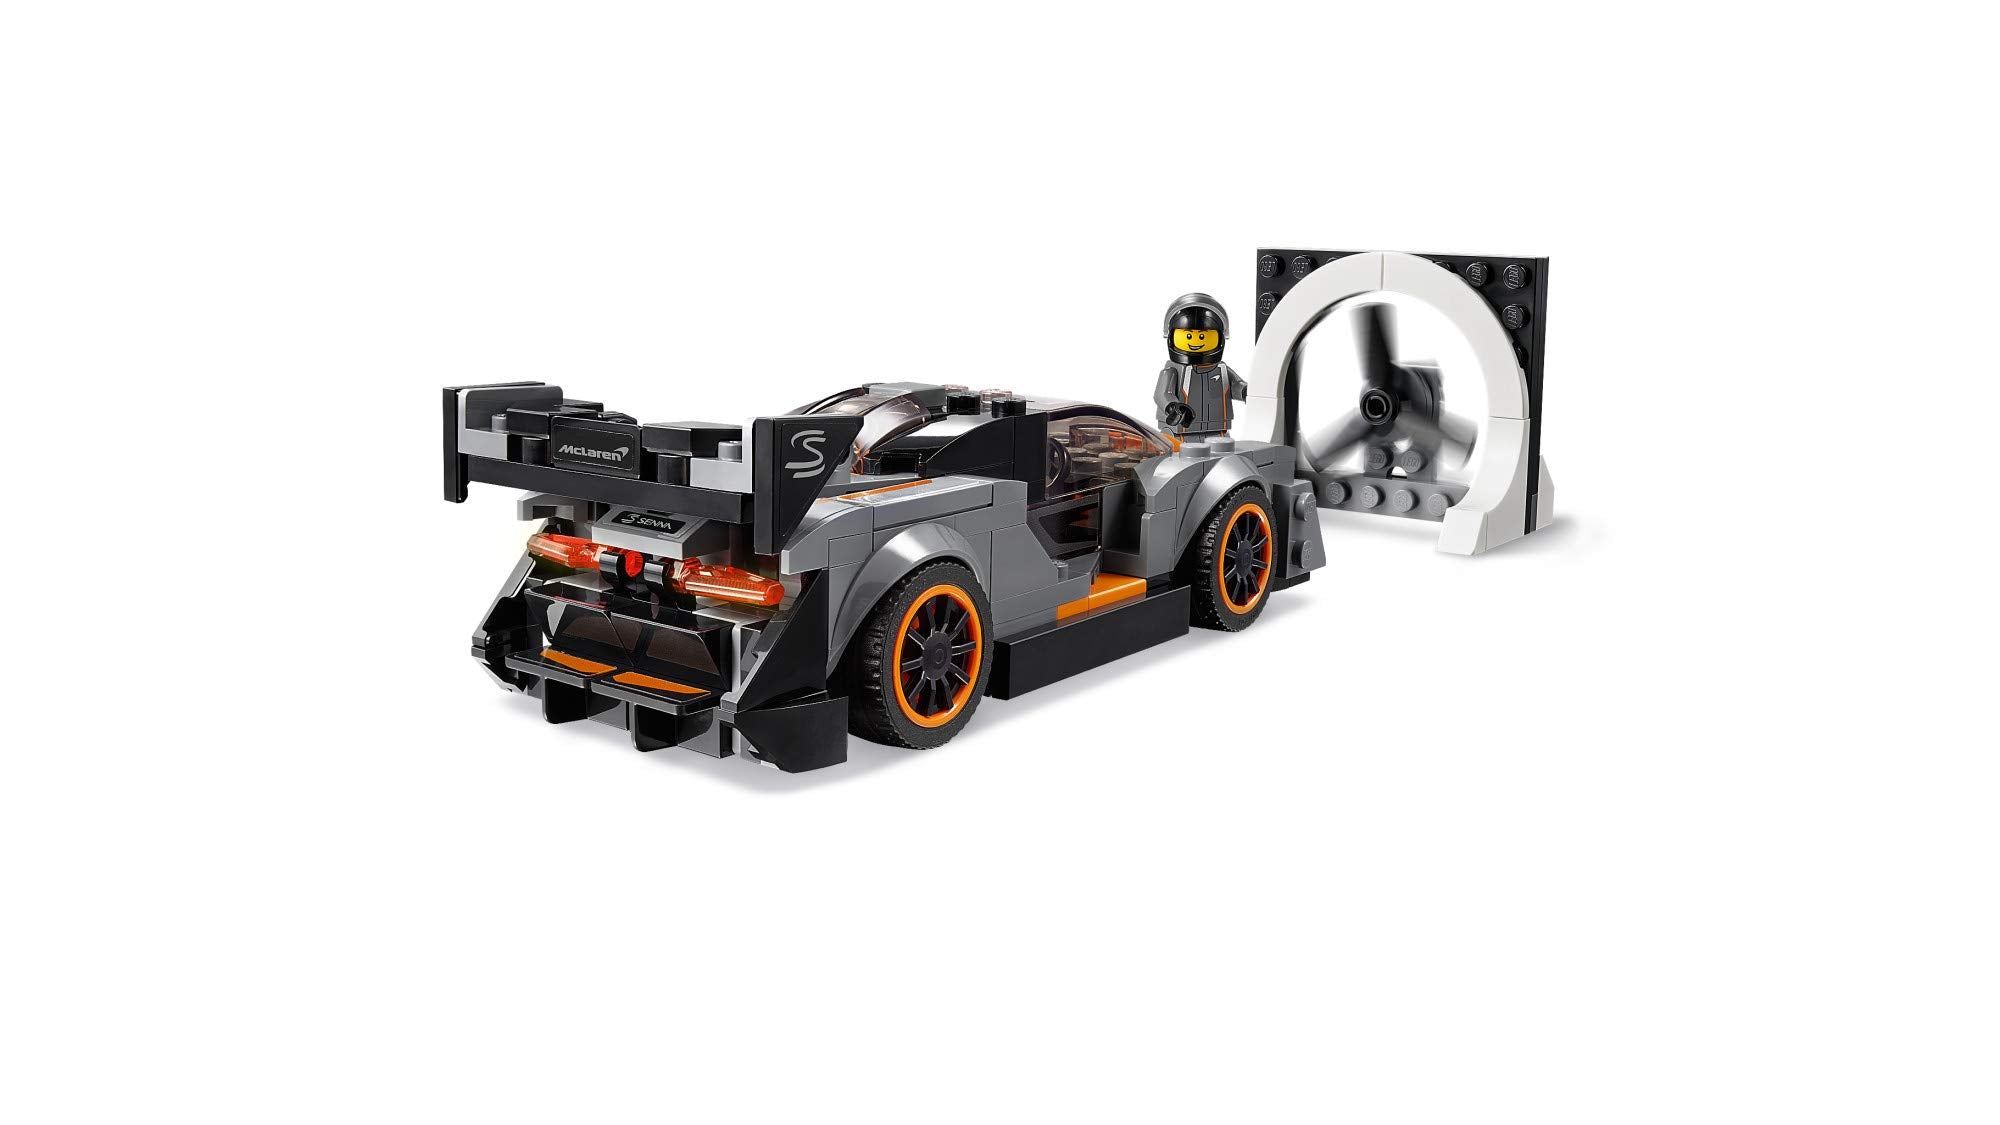 LEGO Speed Champions McLaren Senna 75892 Building Kit , New 2019 (219 Piece)